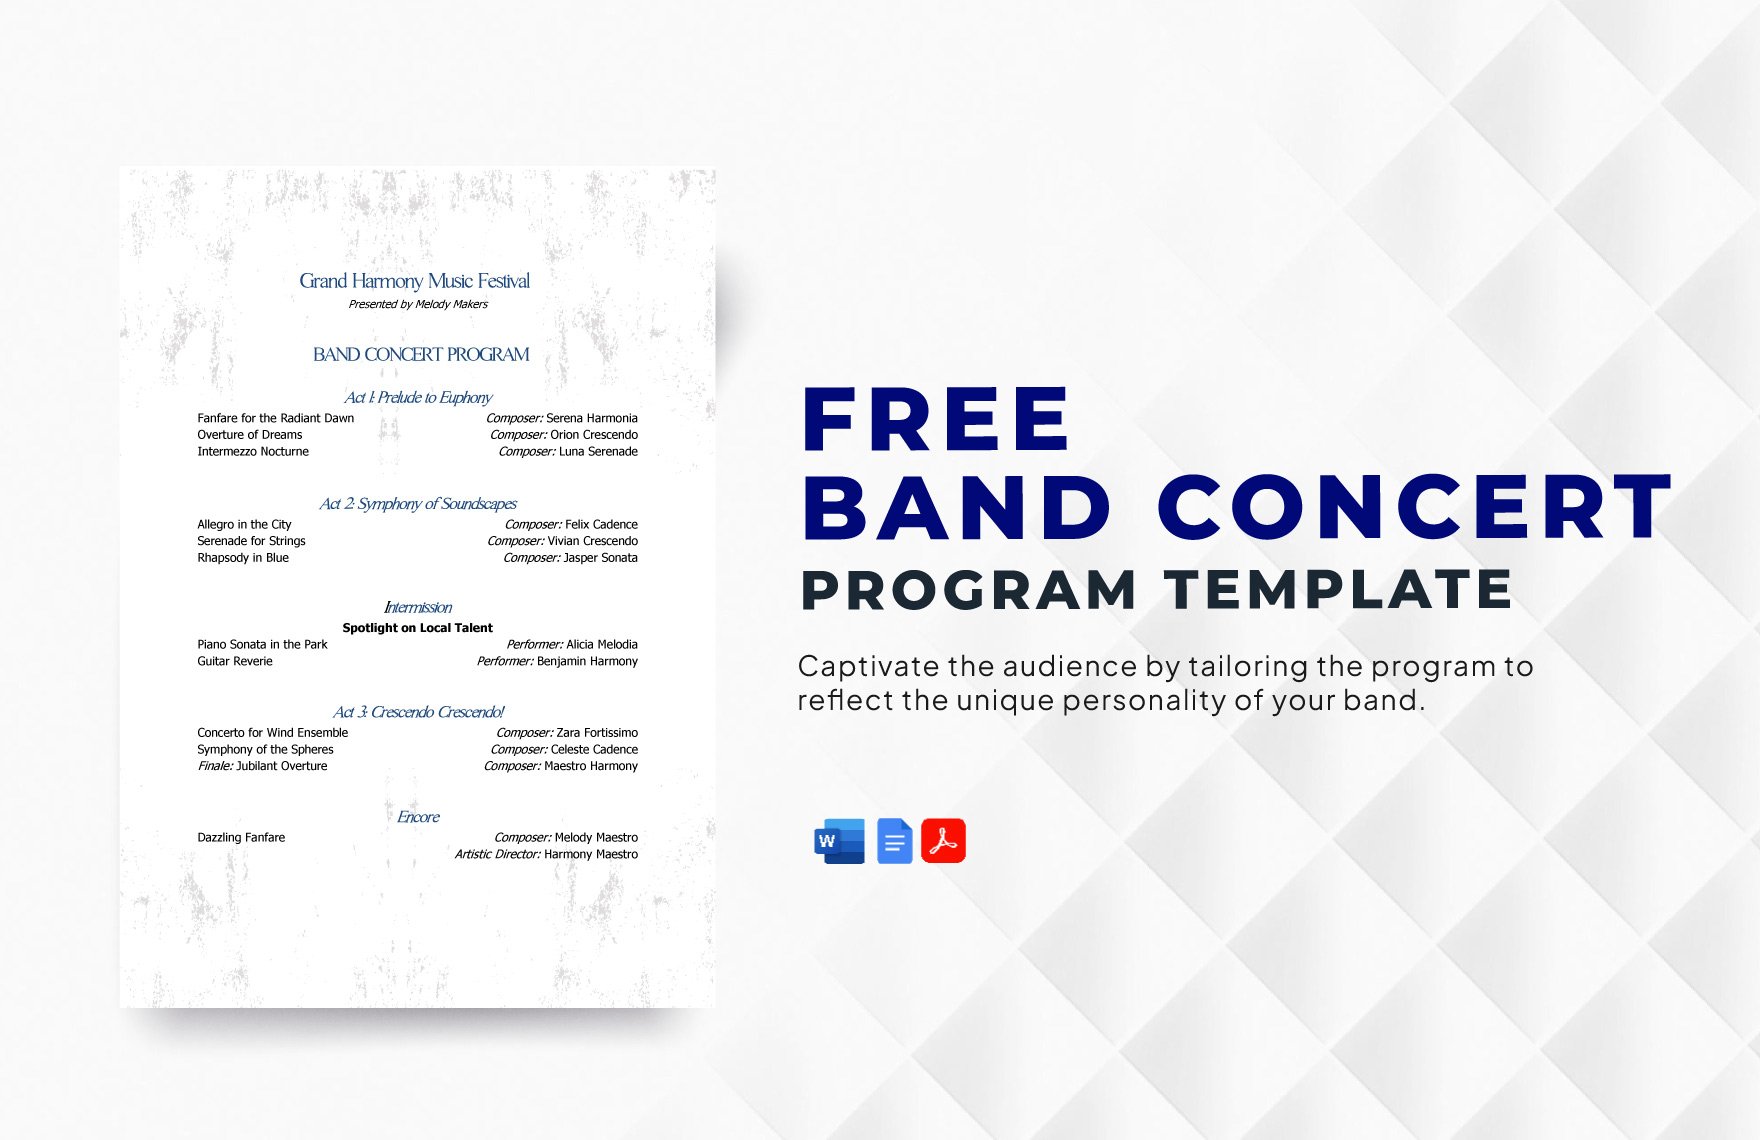 Free Band Concert Program Template